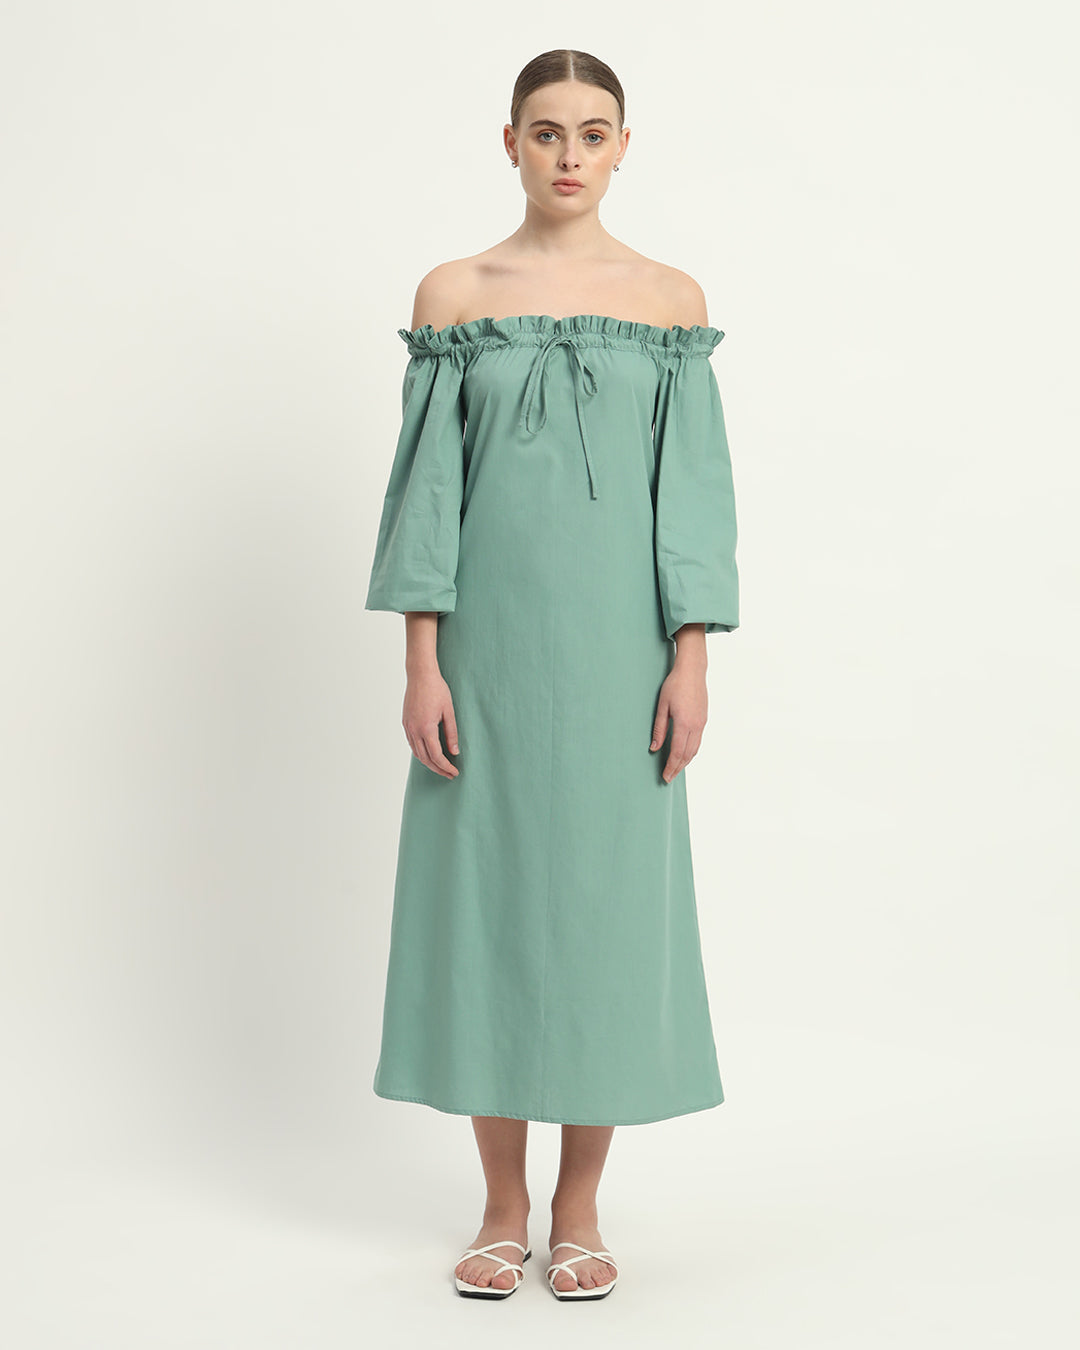 The Mint Carlisle Cotton Dress